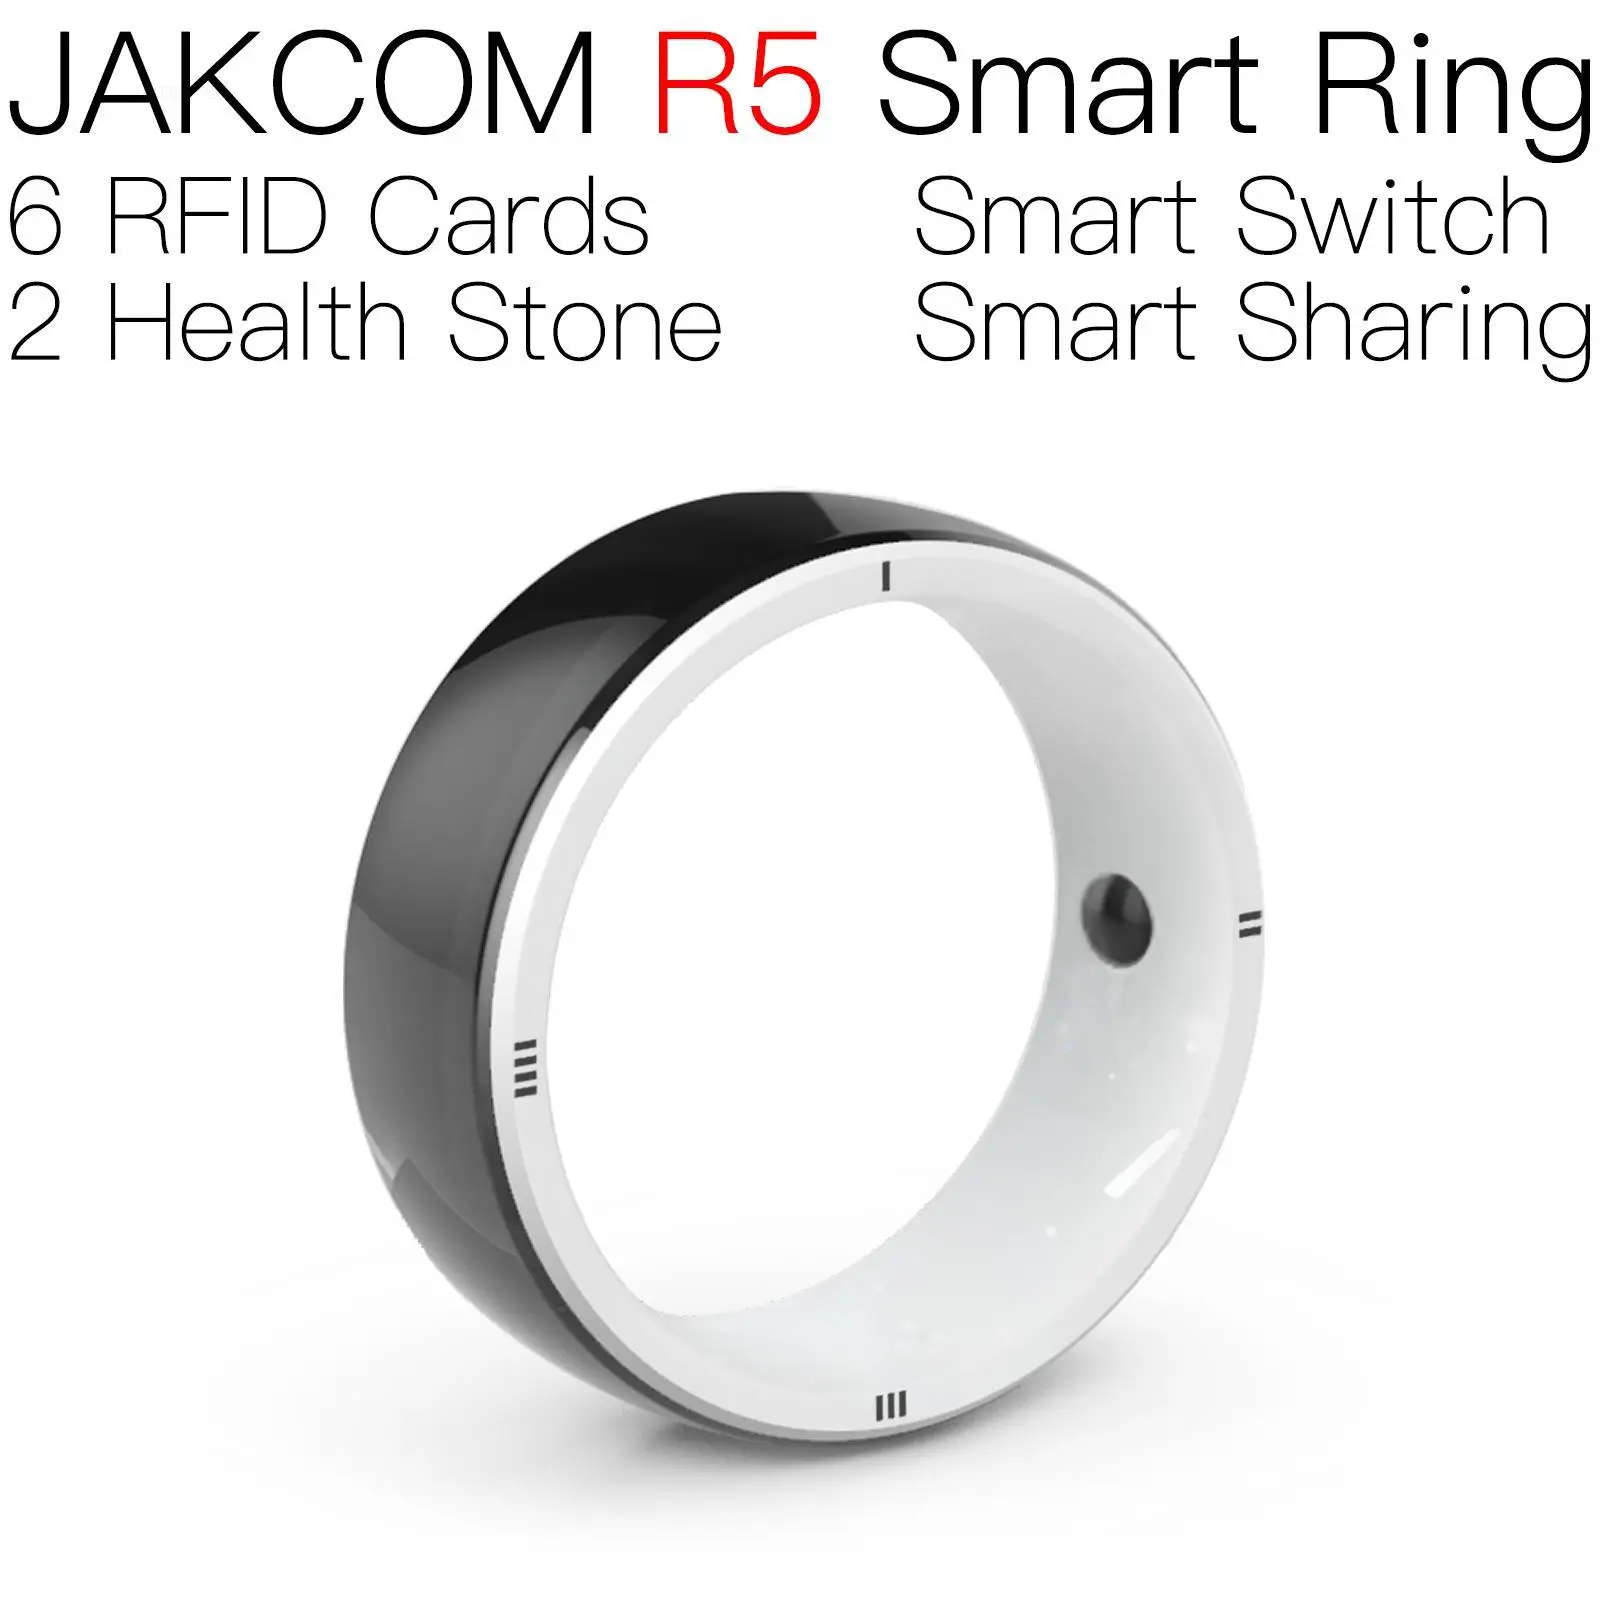 

JAKCOM R5 Smart Ring Super value than chip palomas benzing g2 rings t5577 rewritable 125khz key card rfid tags rf id tag coin